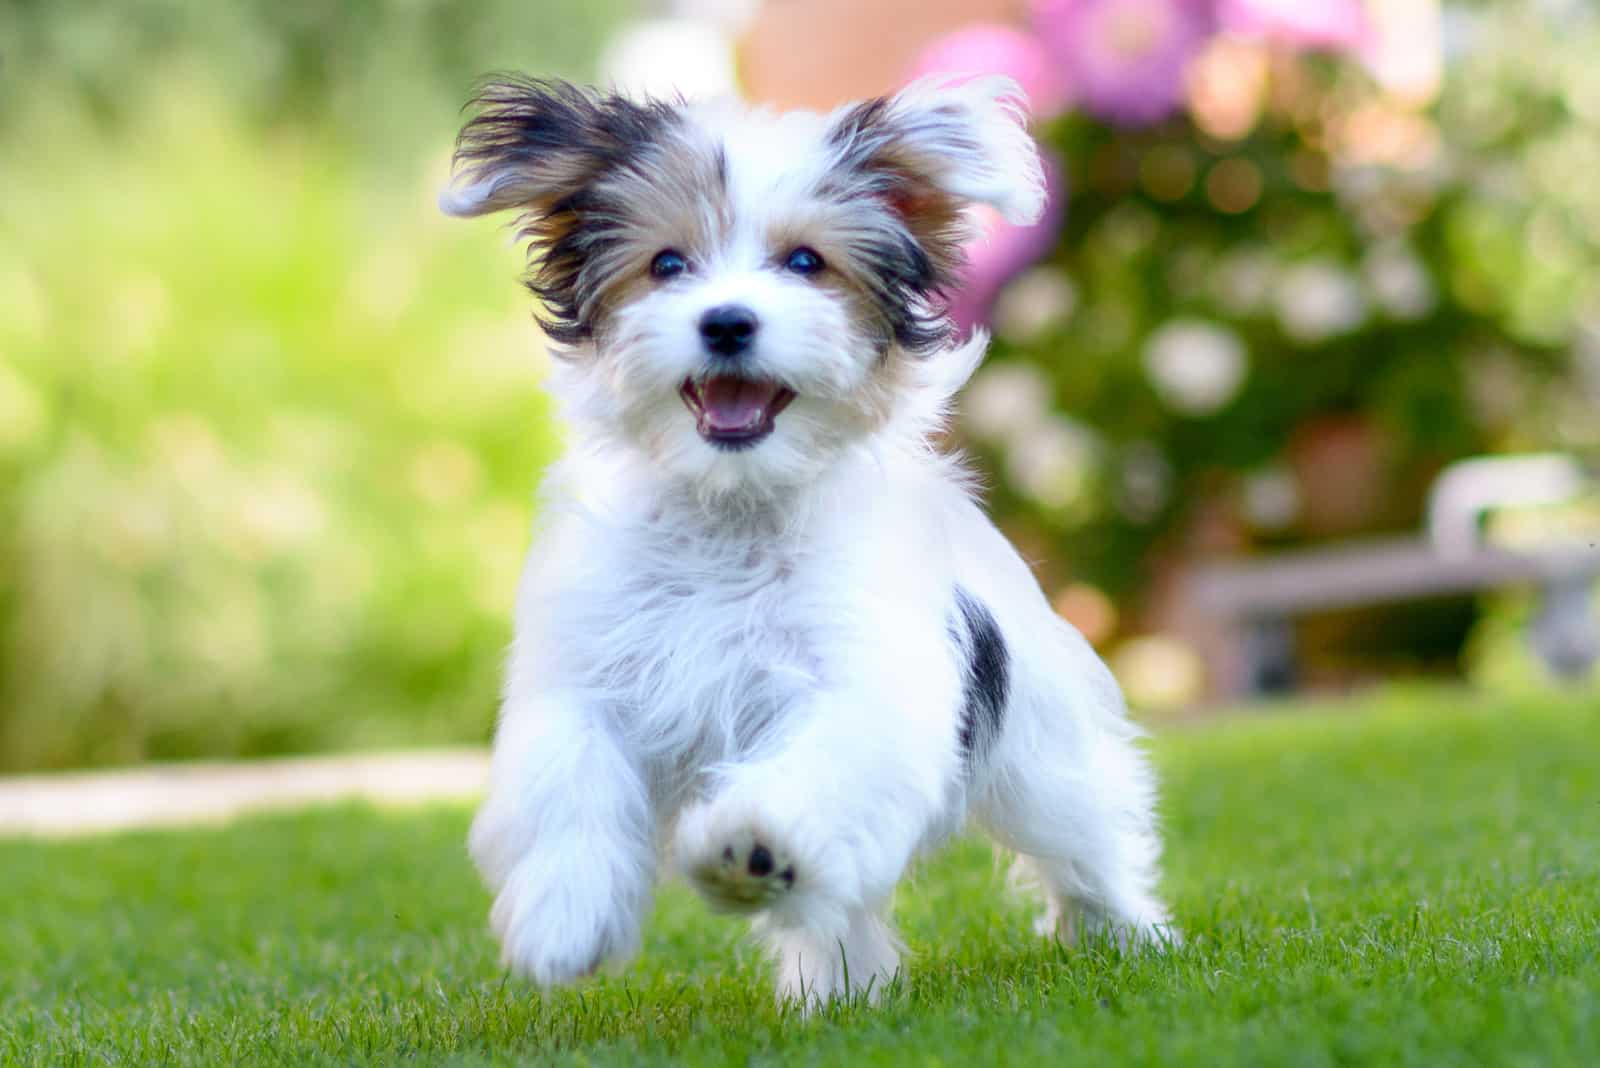 maltese puppy running outside on grass